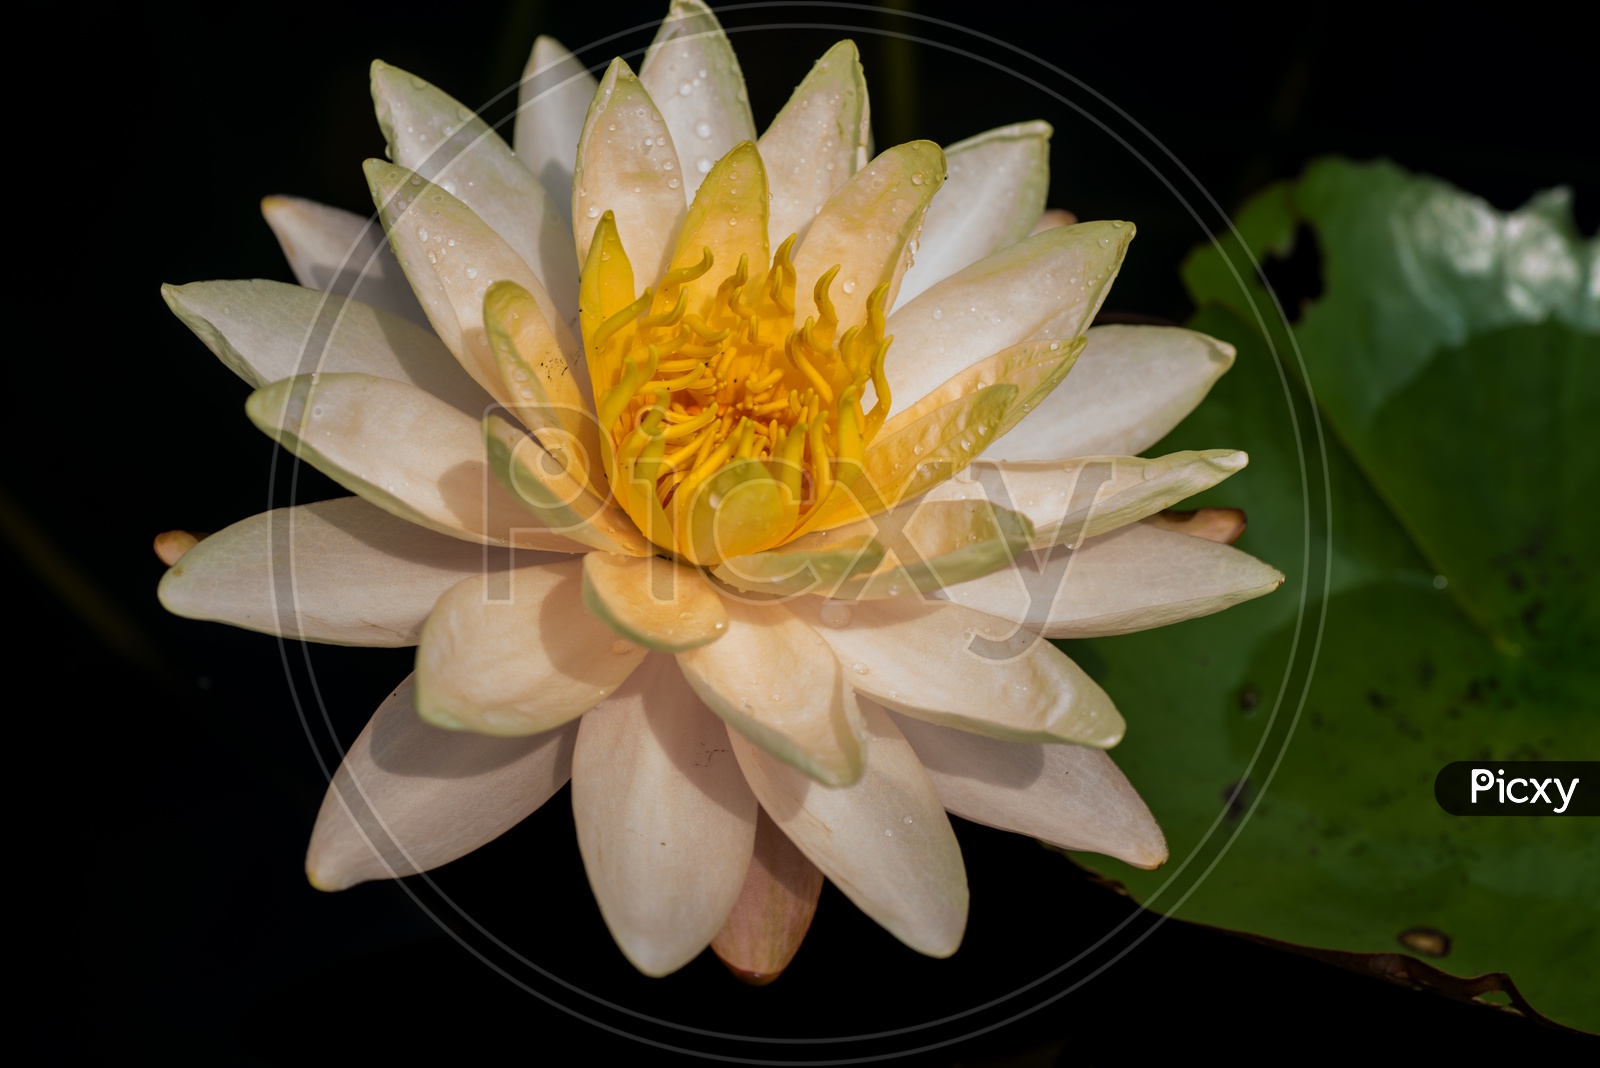 Freshly Blooming  Golden White  Lotus Flower  in a Pond